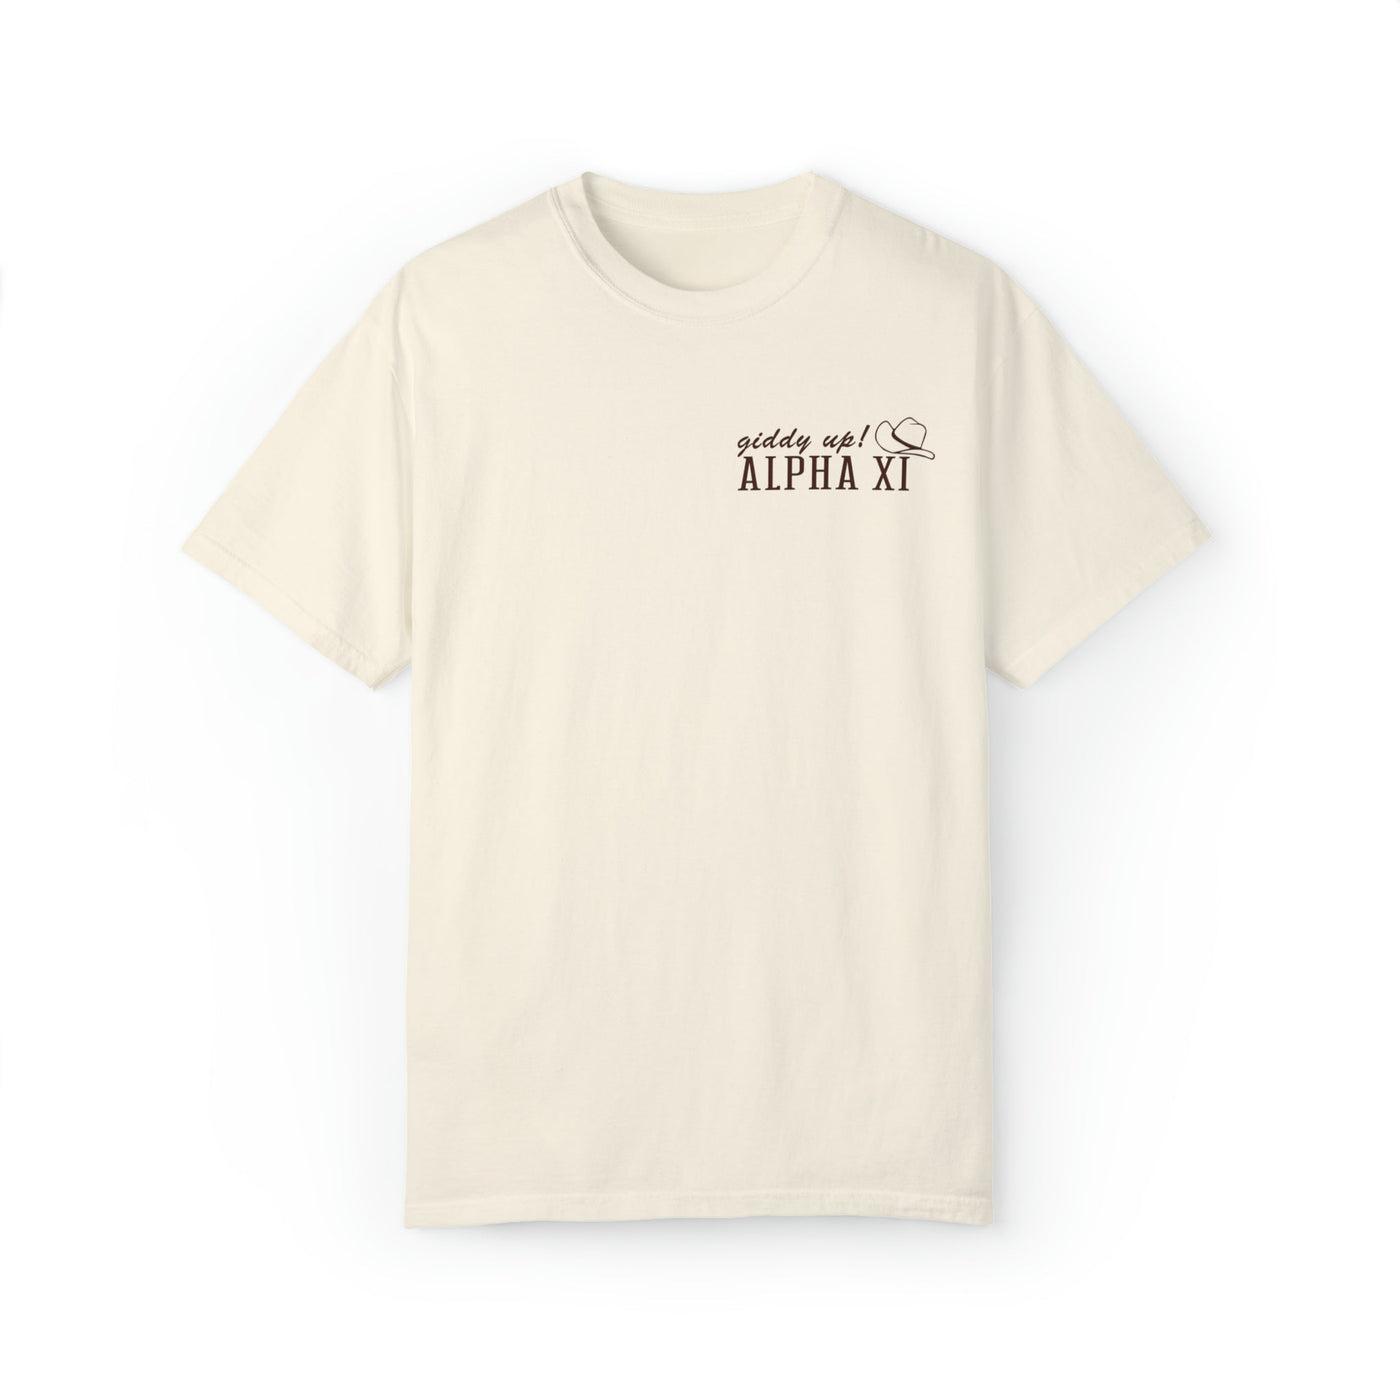 Alpha Xi Delta Country Western Sorority T-shirt